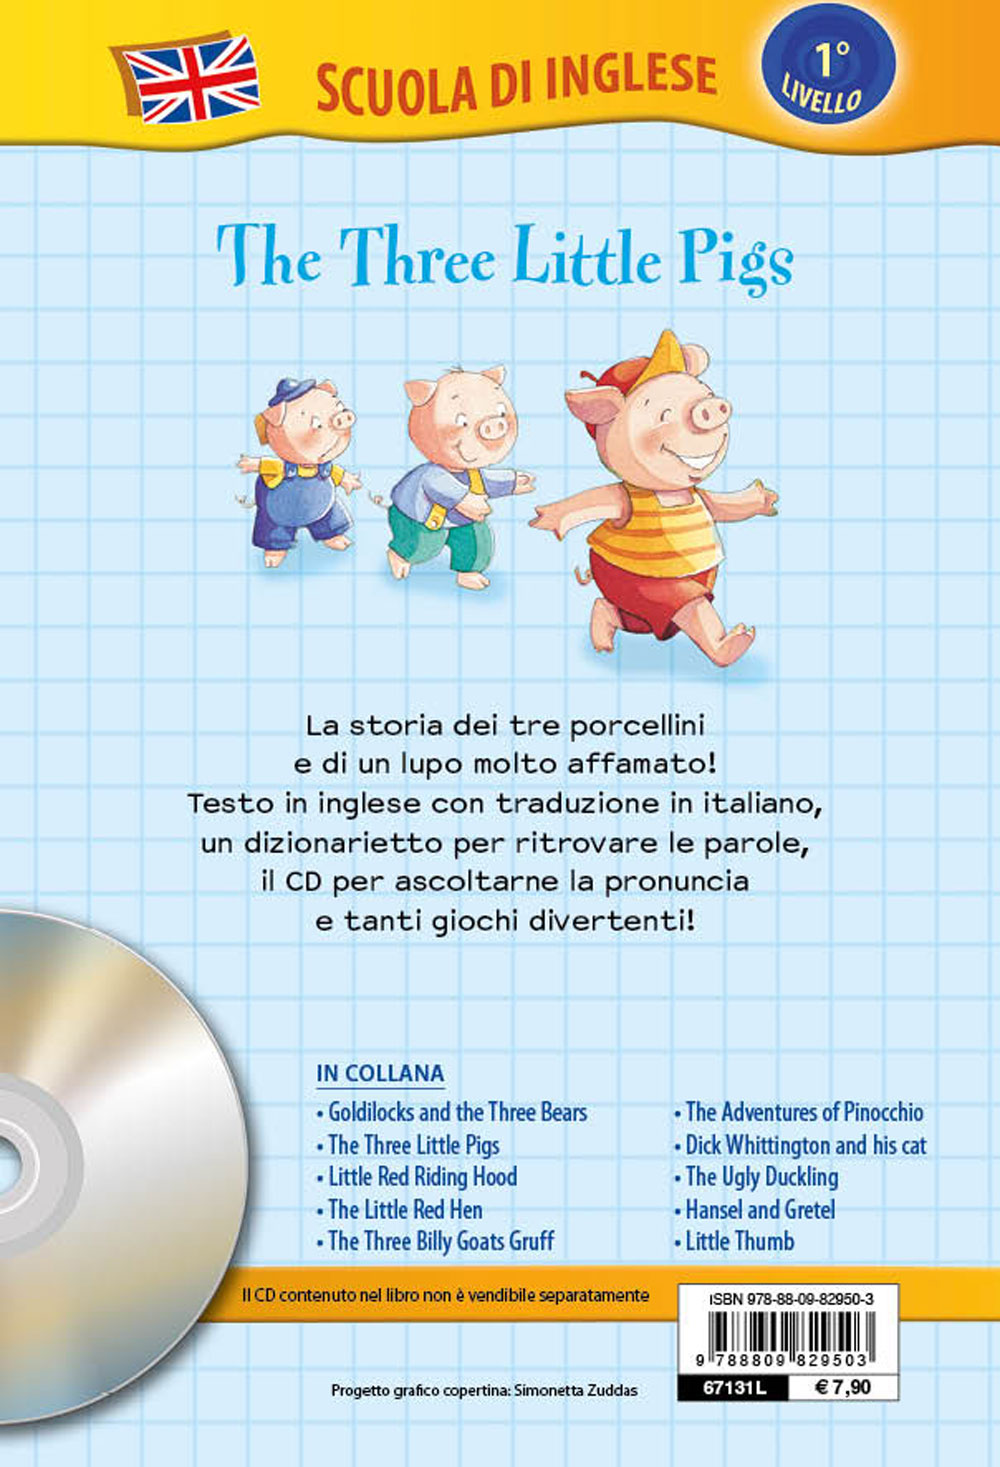 The Three Little Pigs + CD